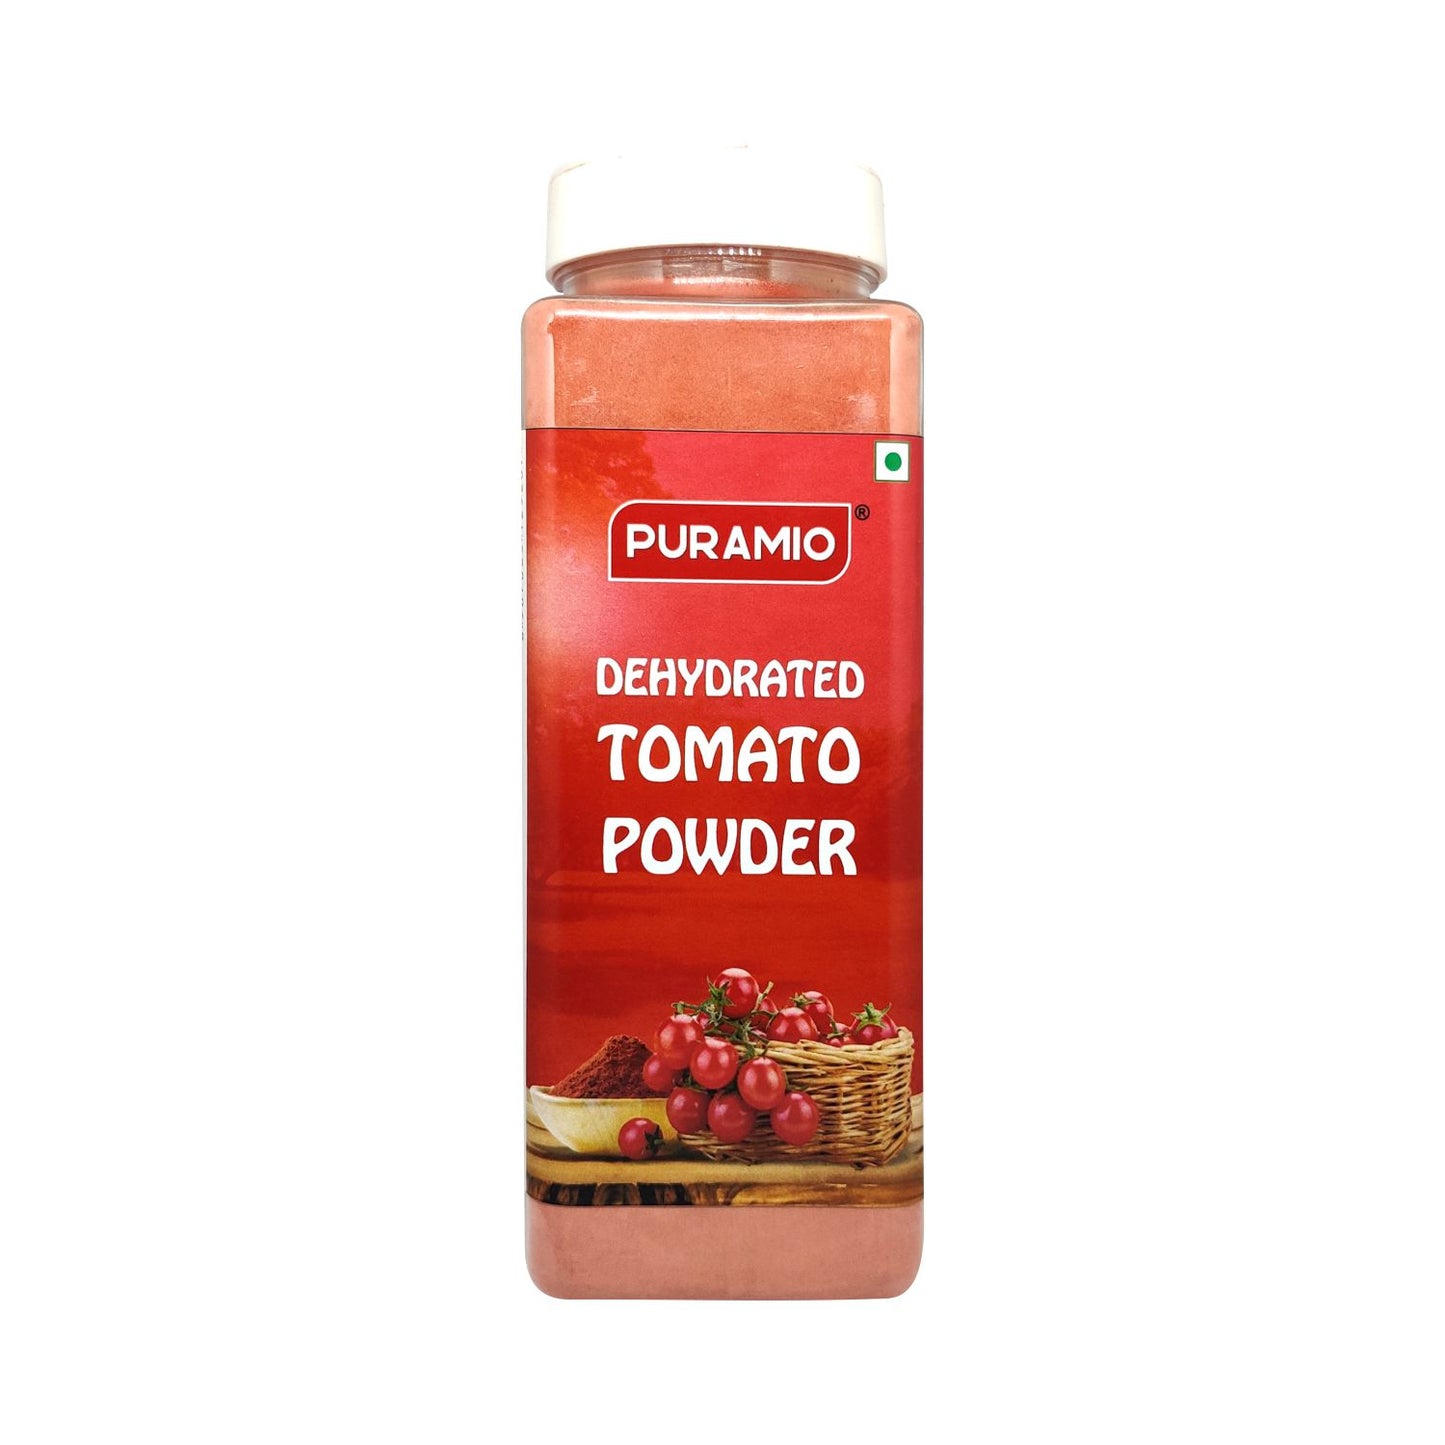 Puramio Dehydrated Tomato Powder